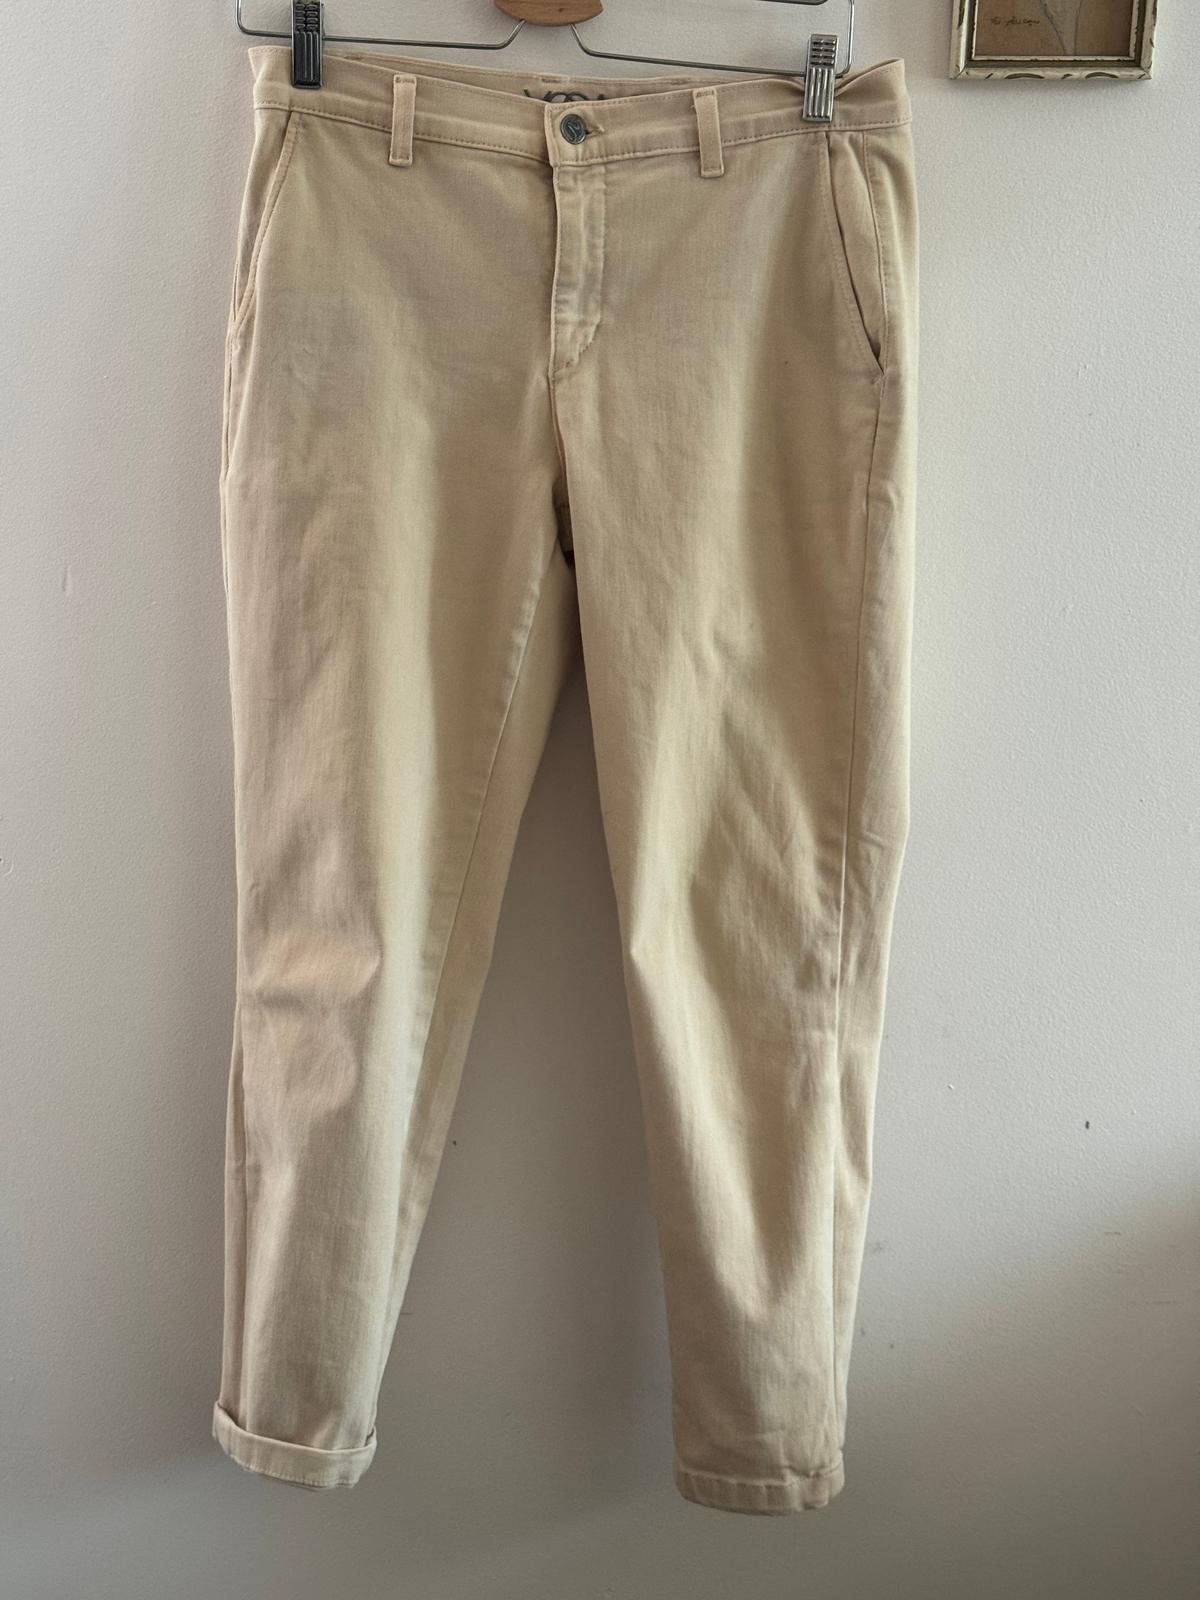 Photo of Pantalon style Capri YOGA Jeans grandeur 28